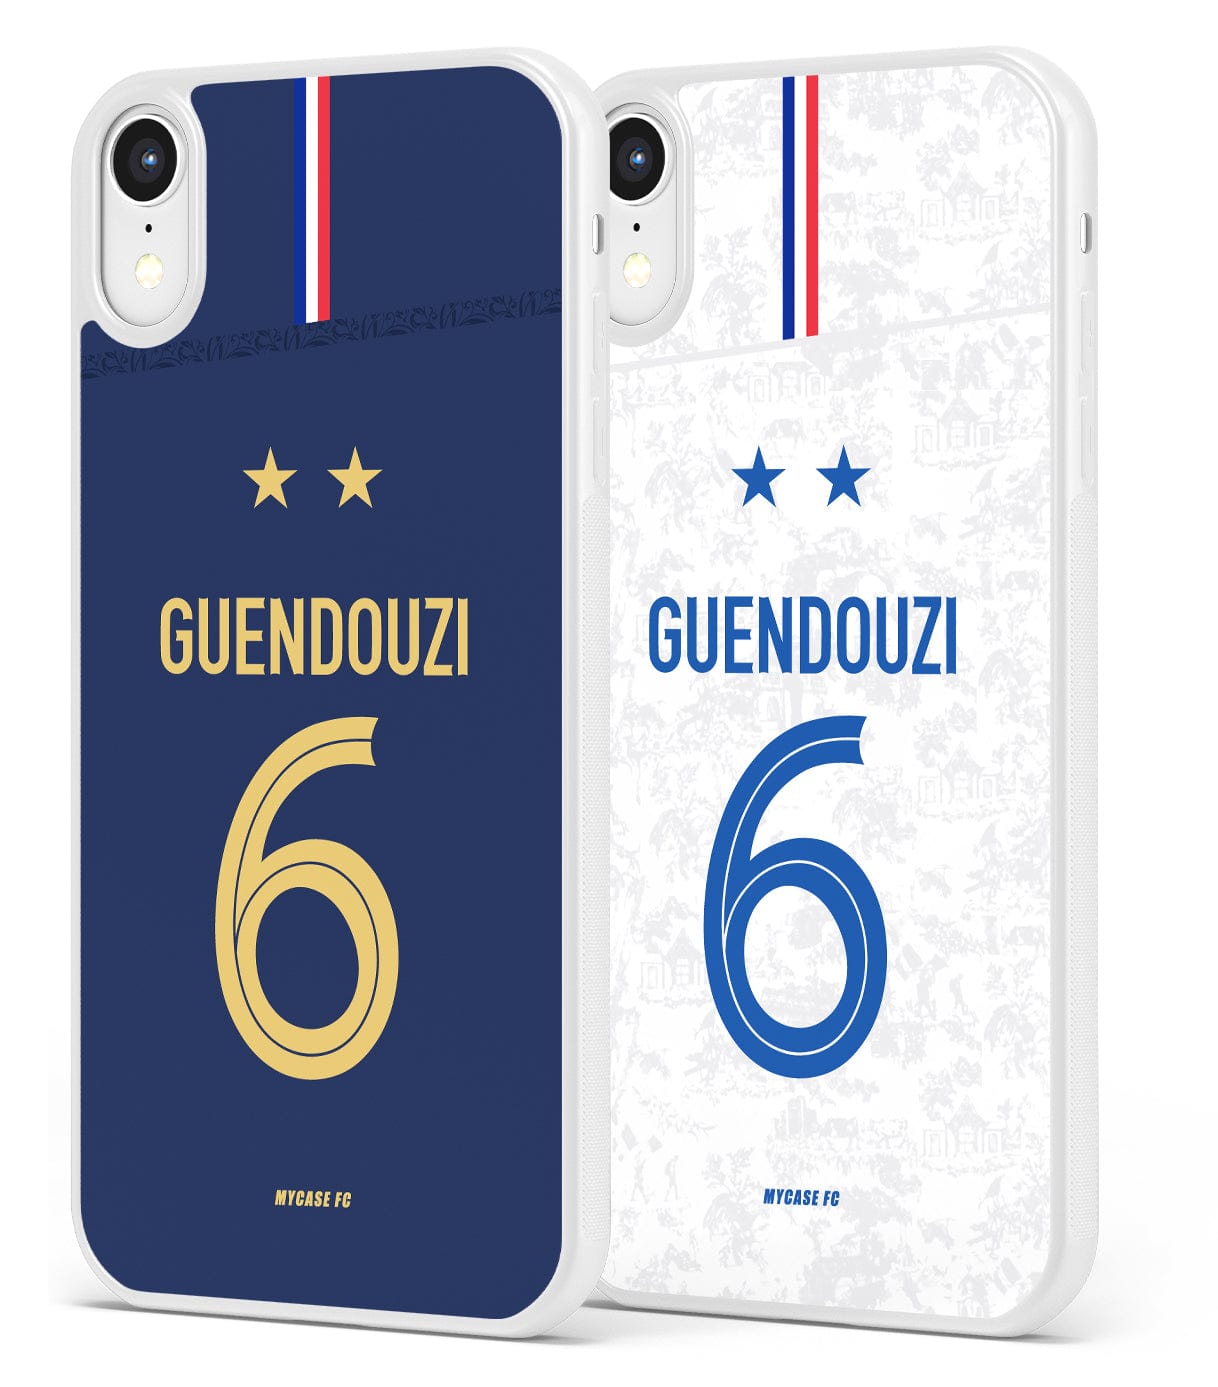 FRANCE - GUENDOUZI - MYCASE FC